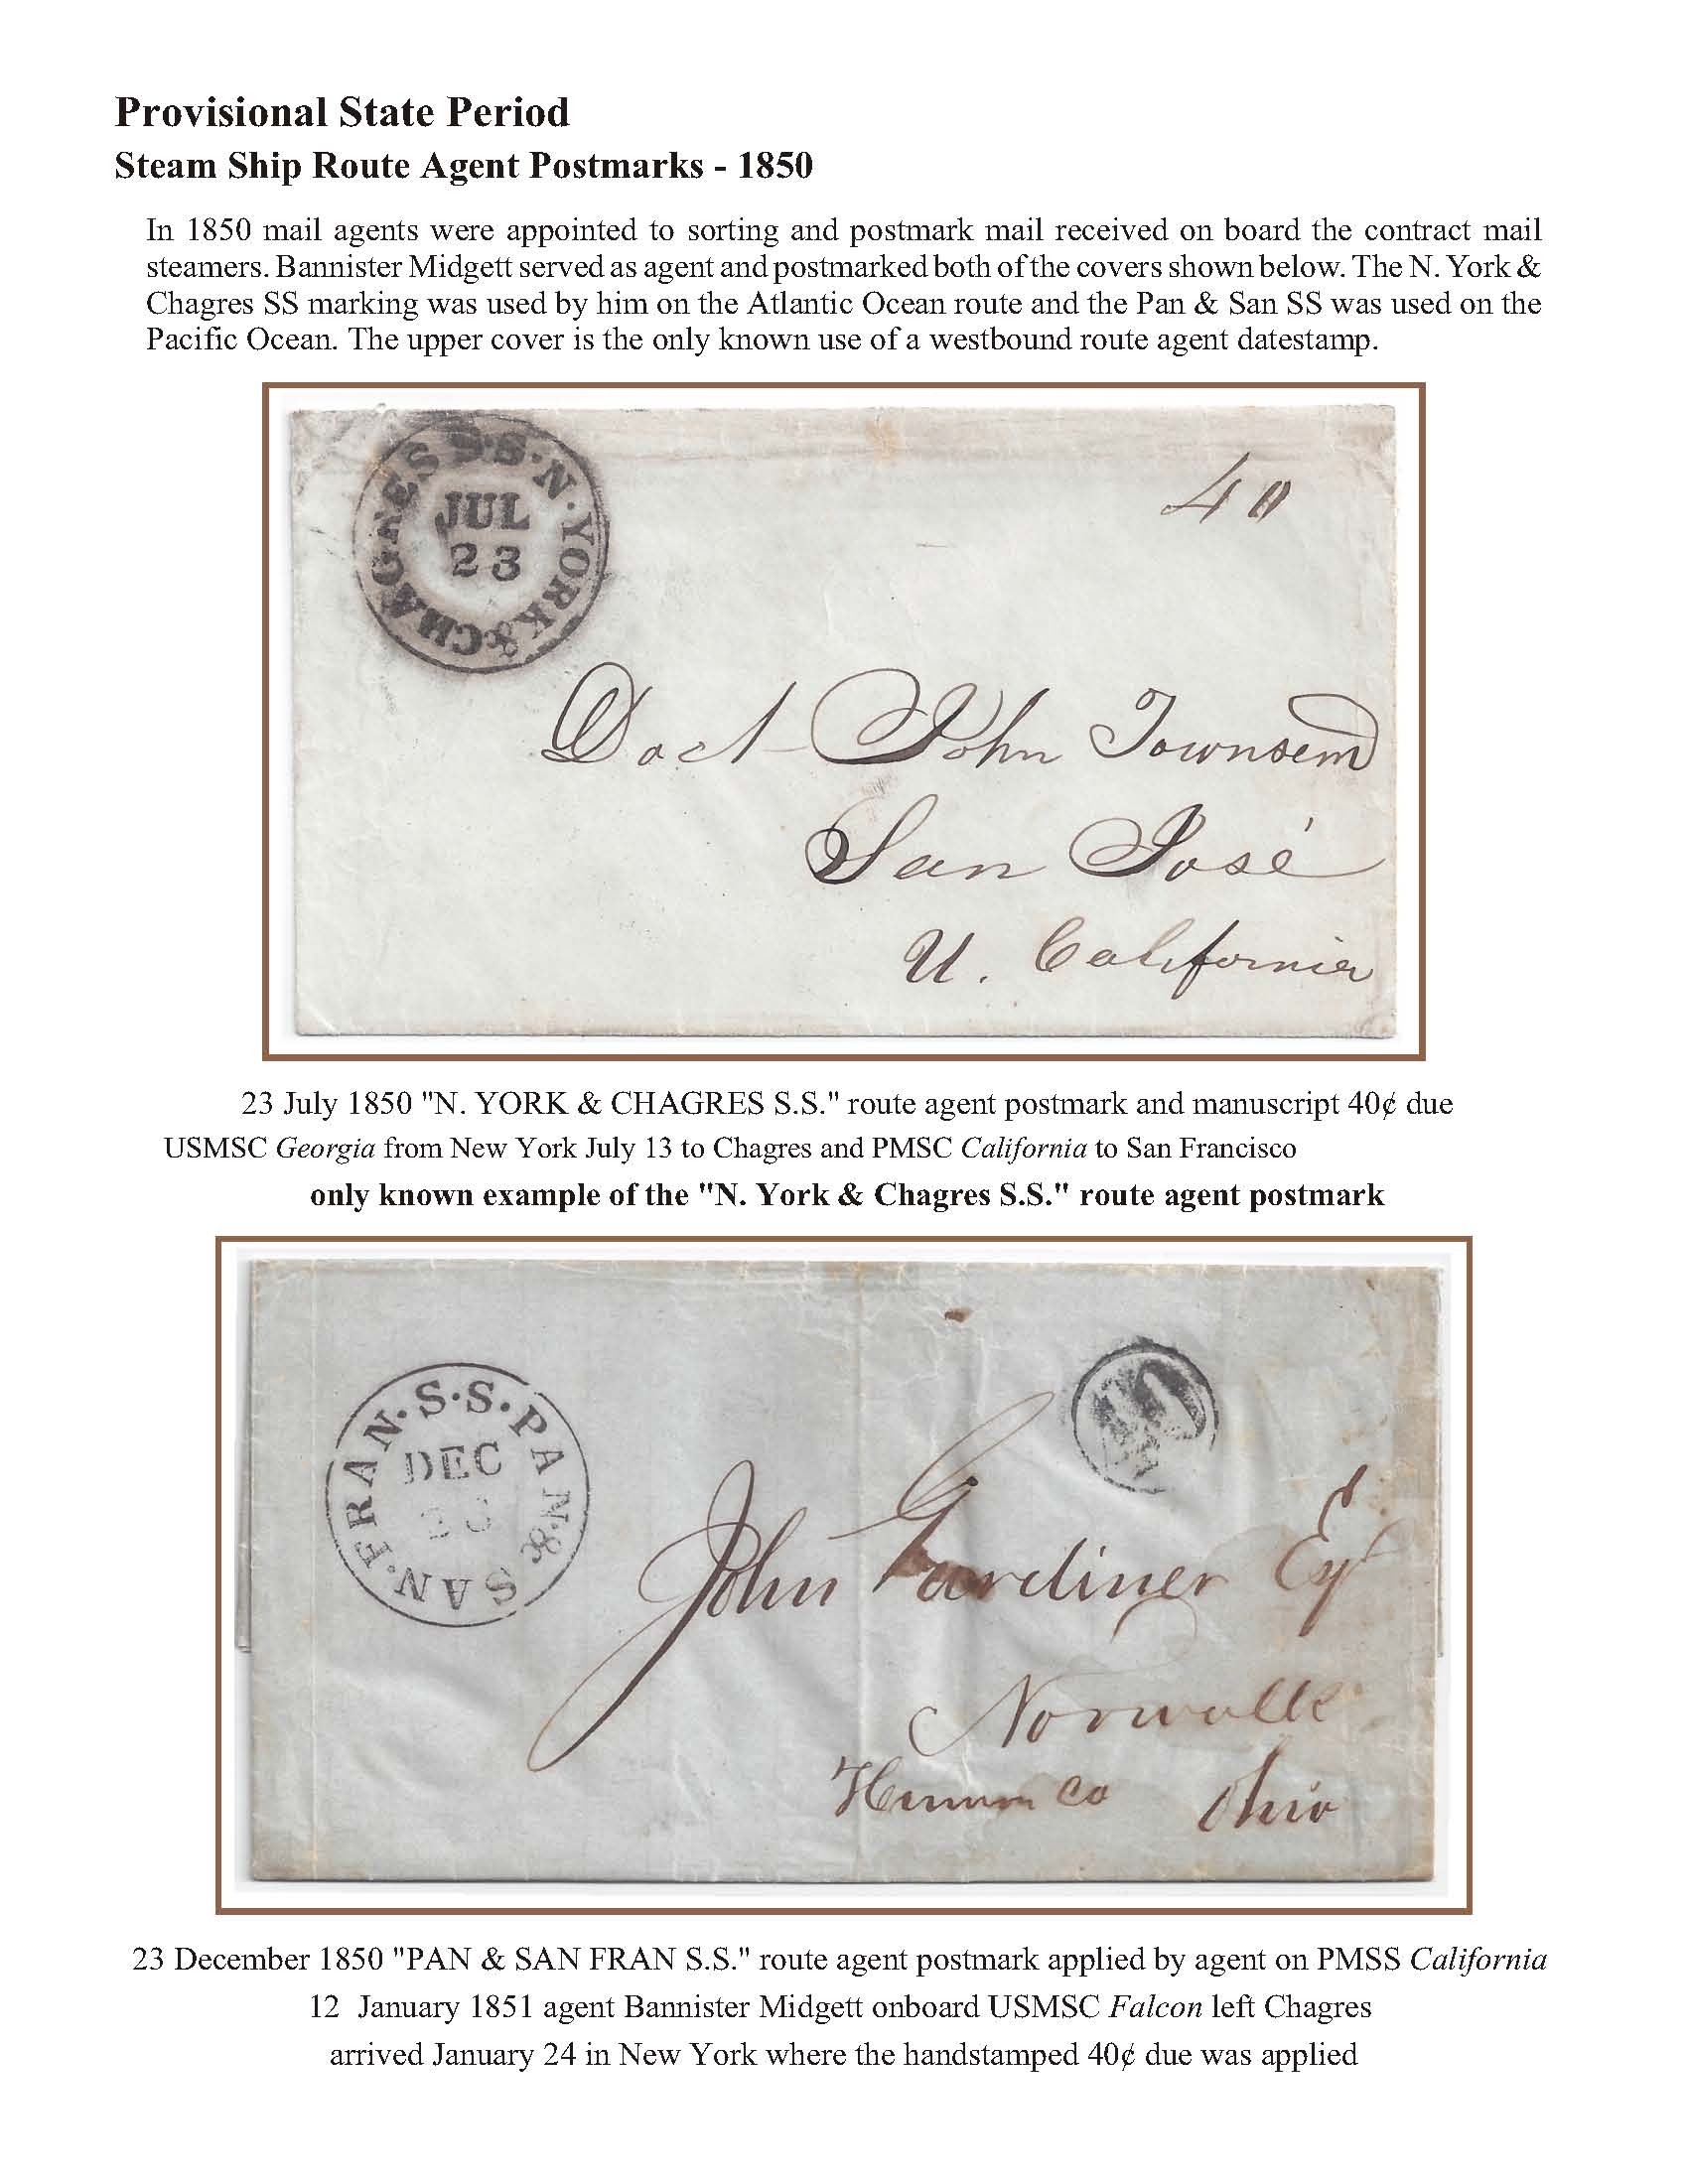 Alta California Postal History to 1851